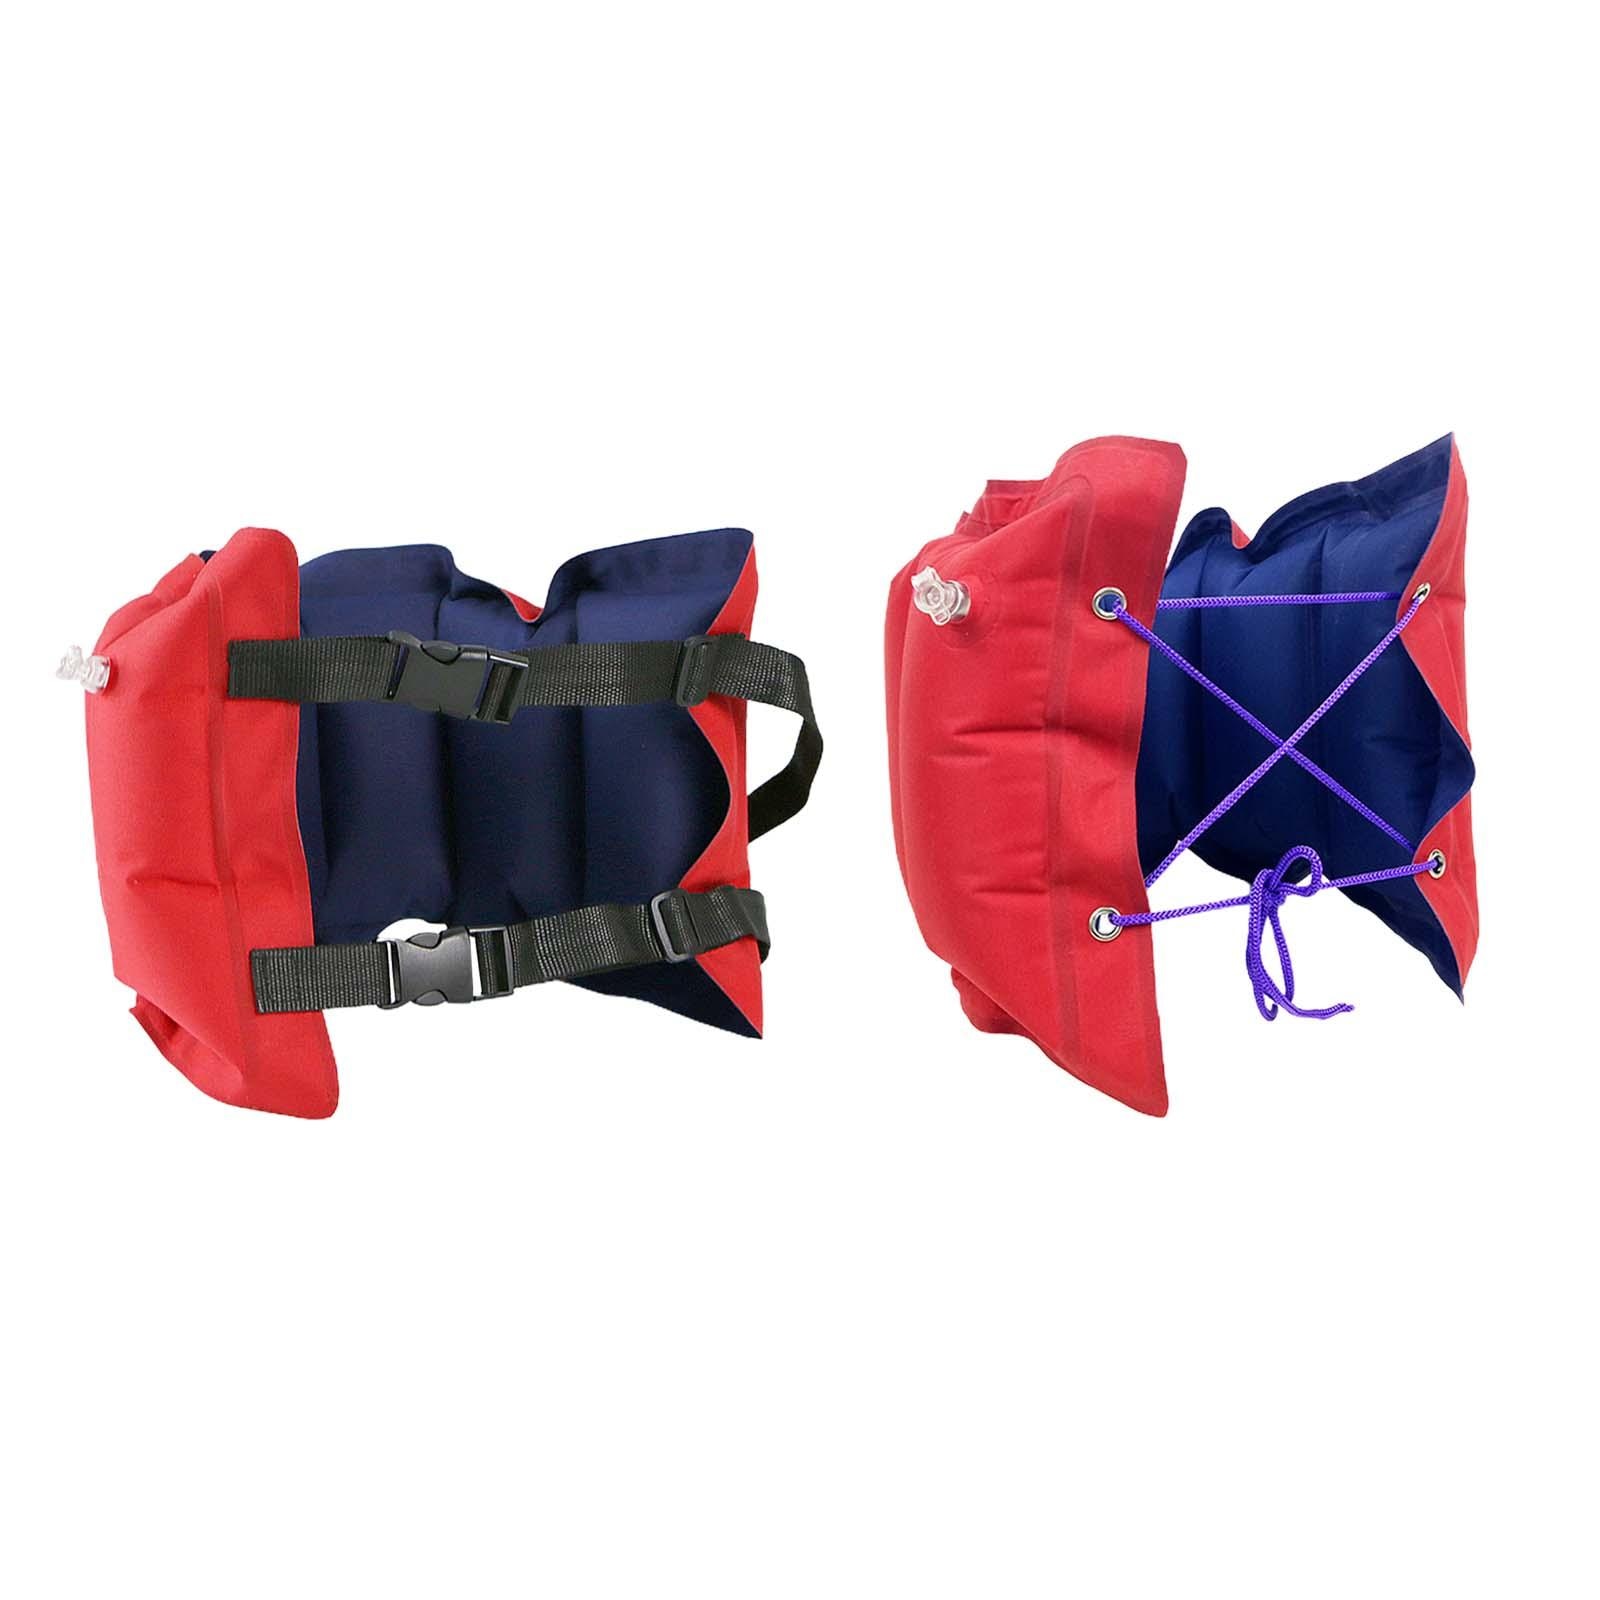 Inflatable Swim Belt Flotation Aid Comfortable Swimming Training Aid Beginner Pool Swimming s Portable Swim Training Belt